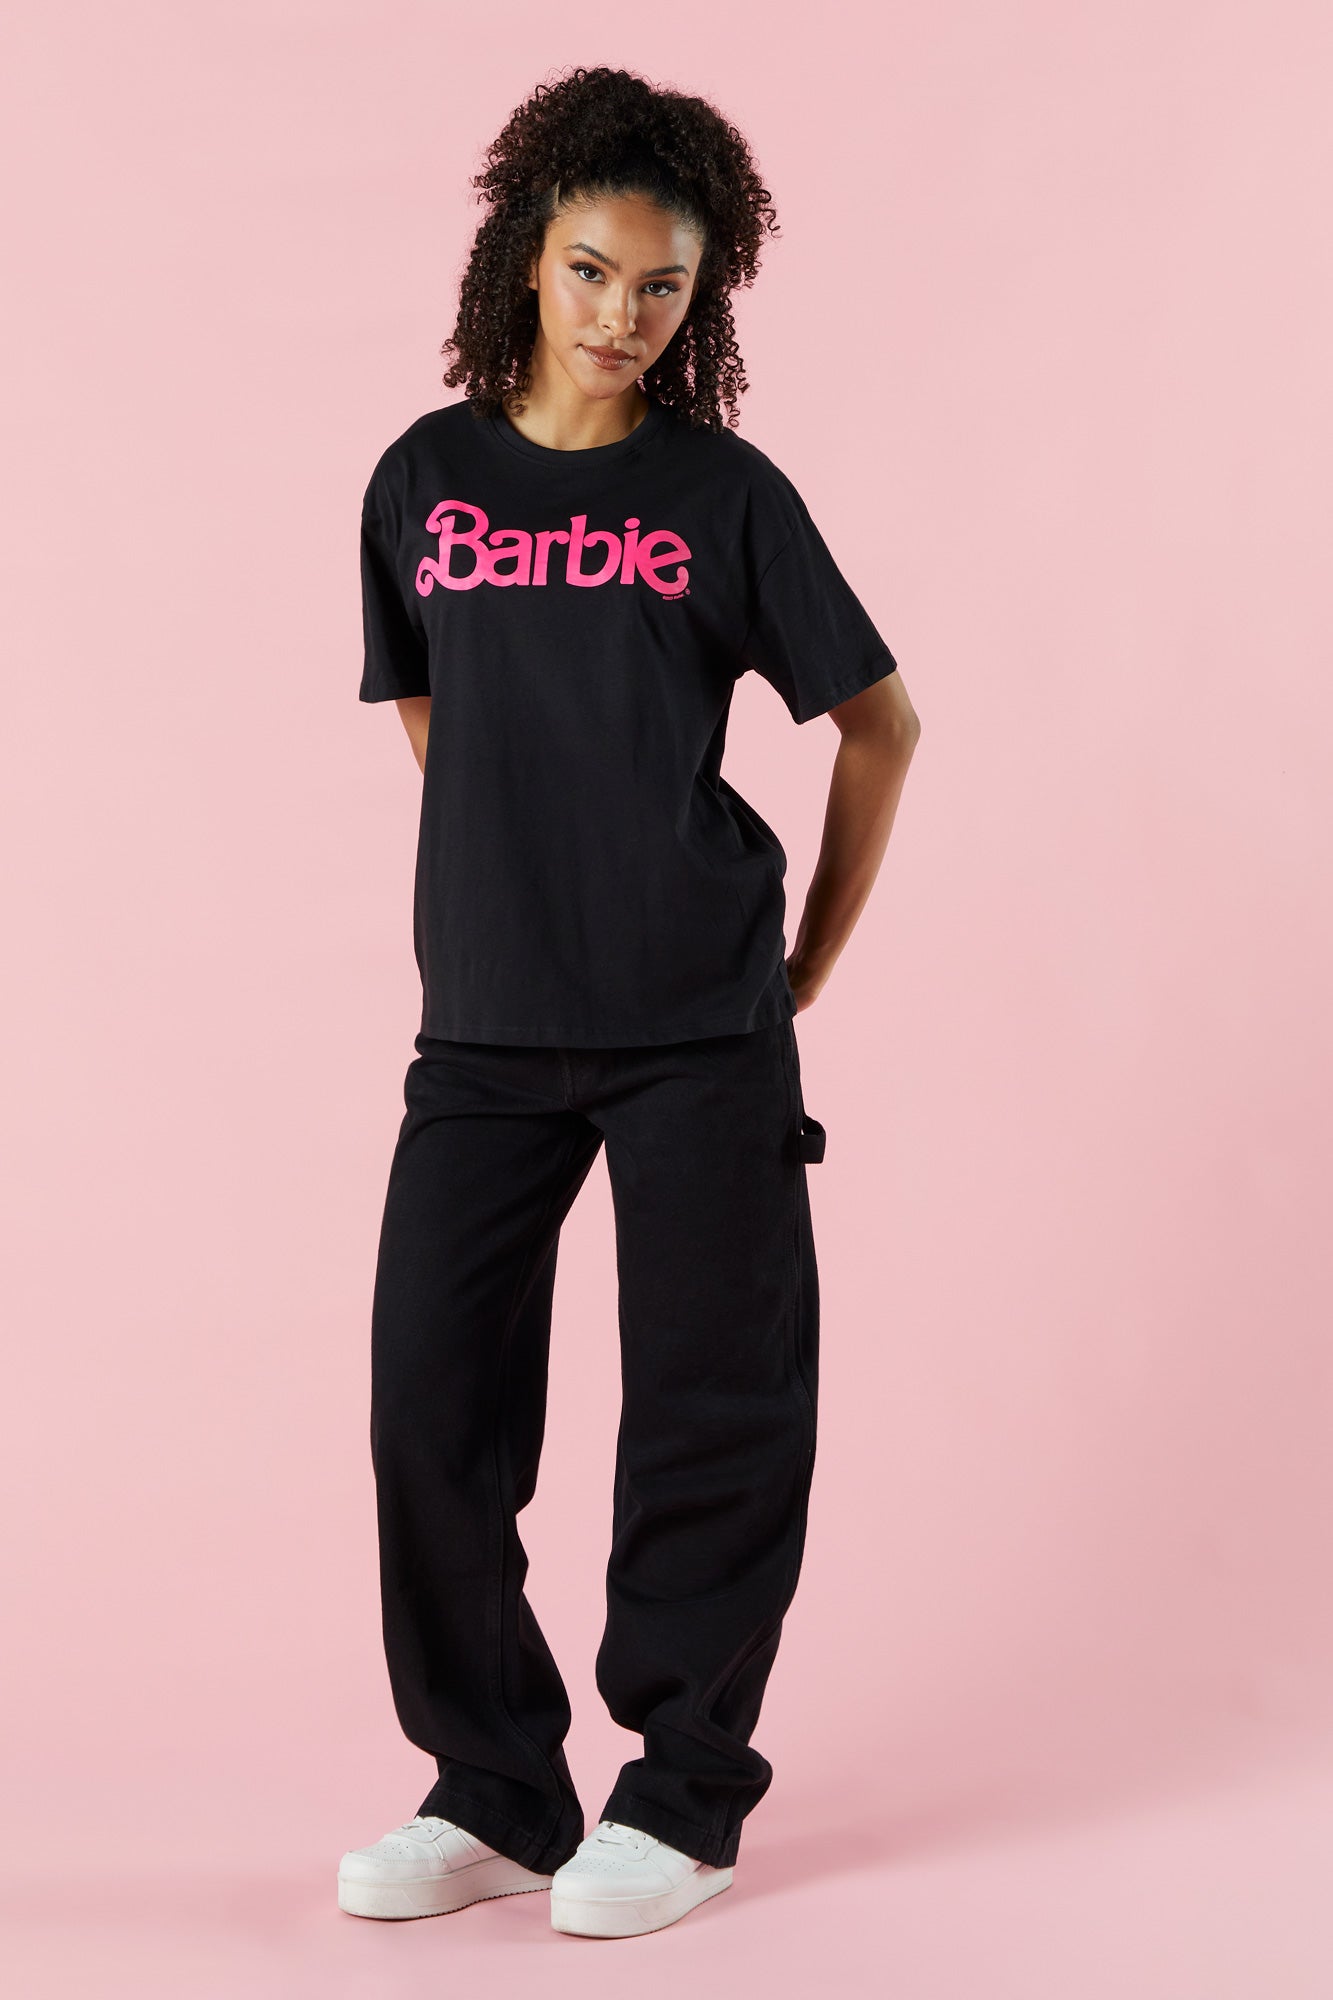 Barbie™ Logo Black Graphic Boyfriend T-Shirt